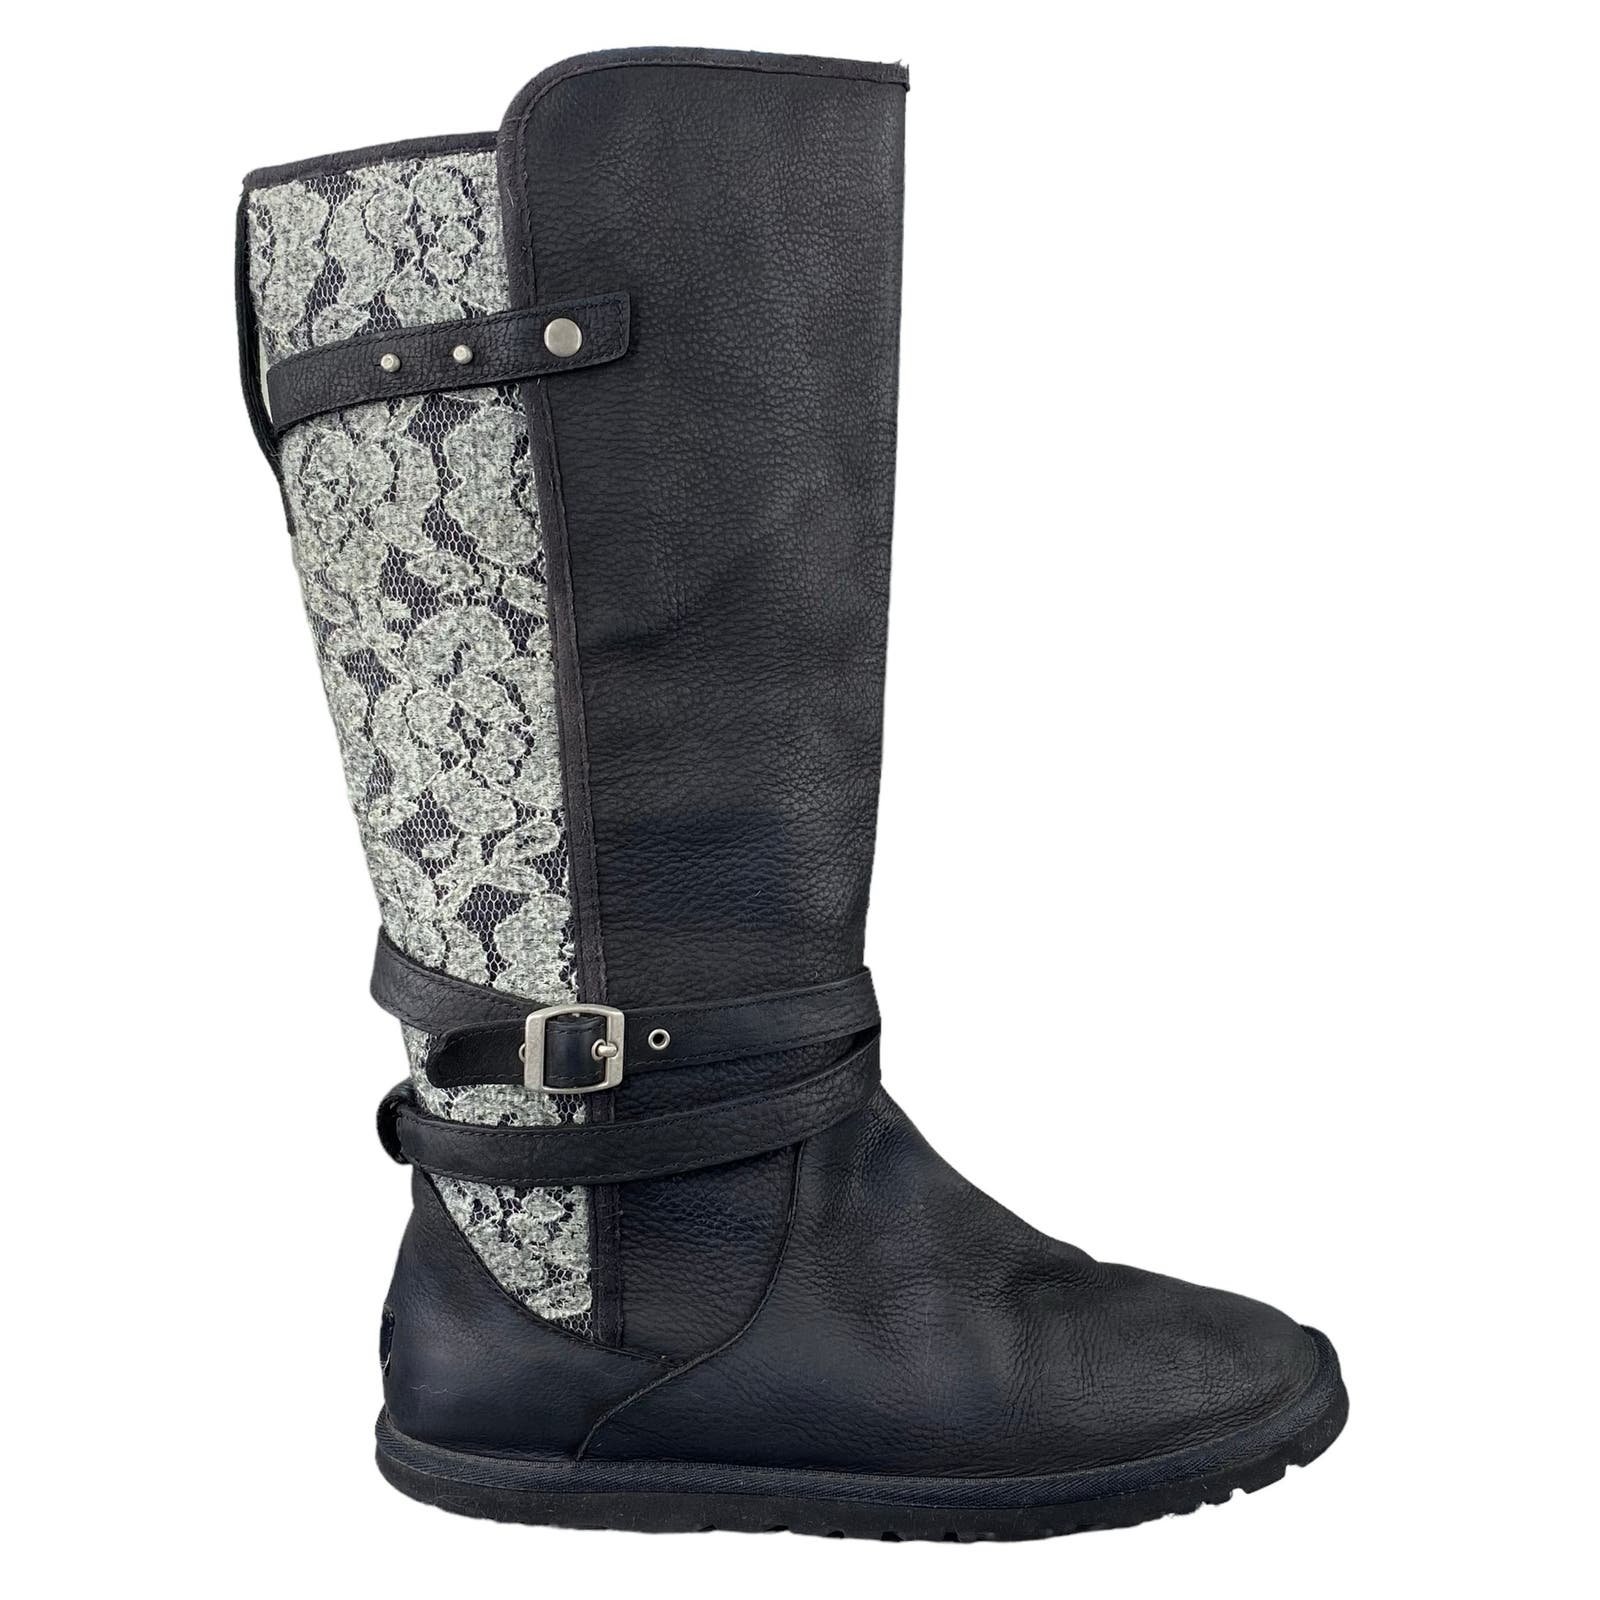 UGG Women’s Marielle Black Leather Winter Boot Size US 11 lrrXa2RAf